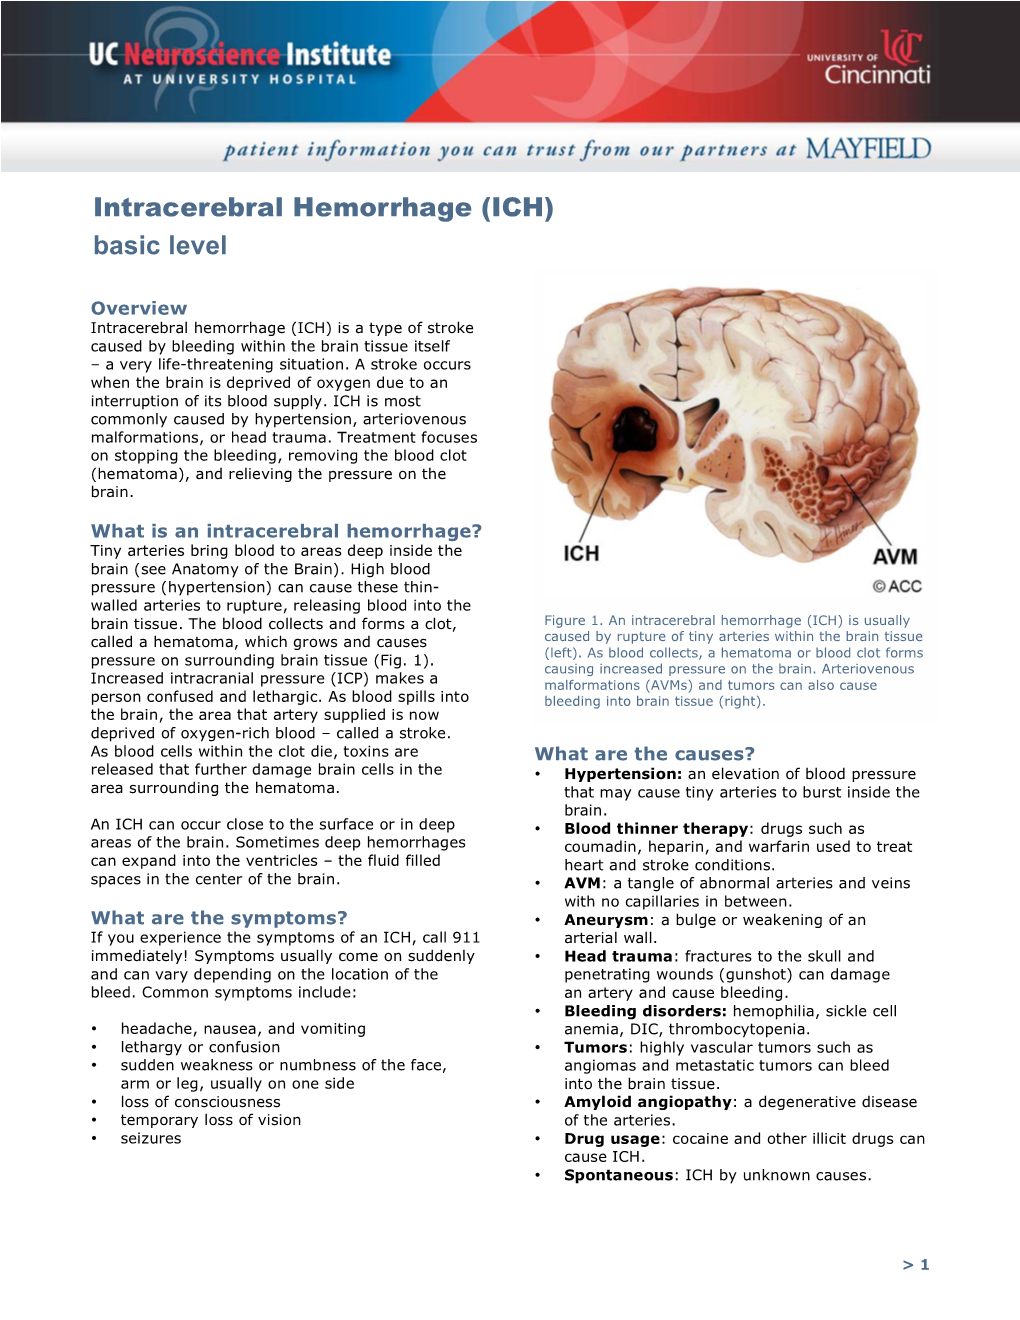 Intracerebral Hemorrhage (ICH) Basic Level